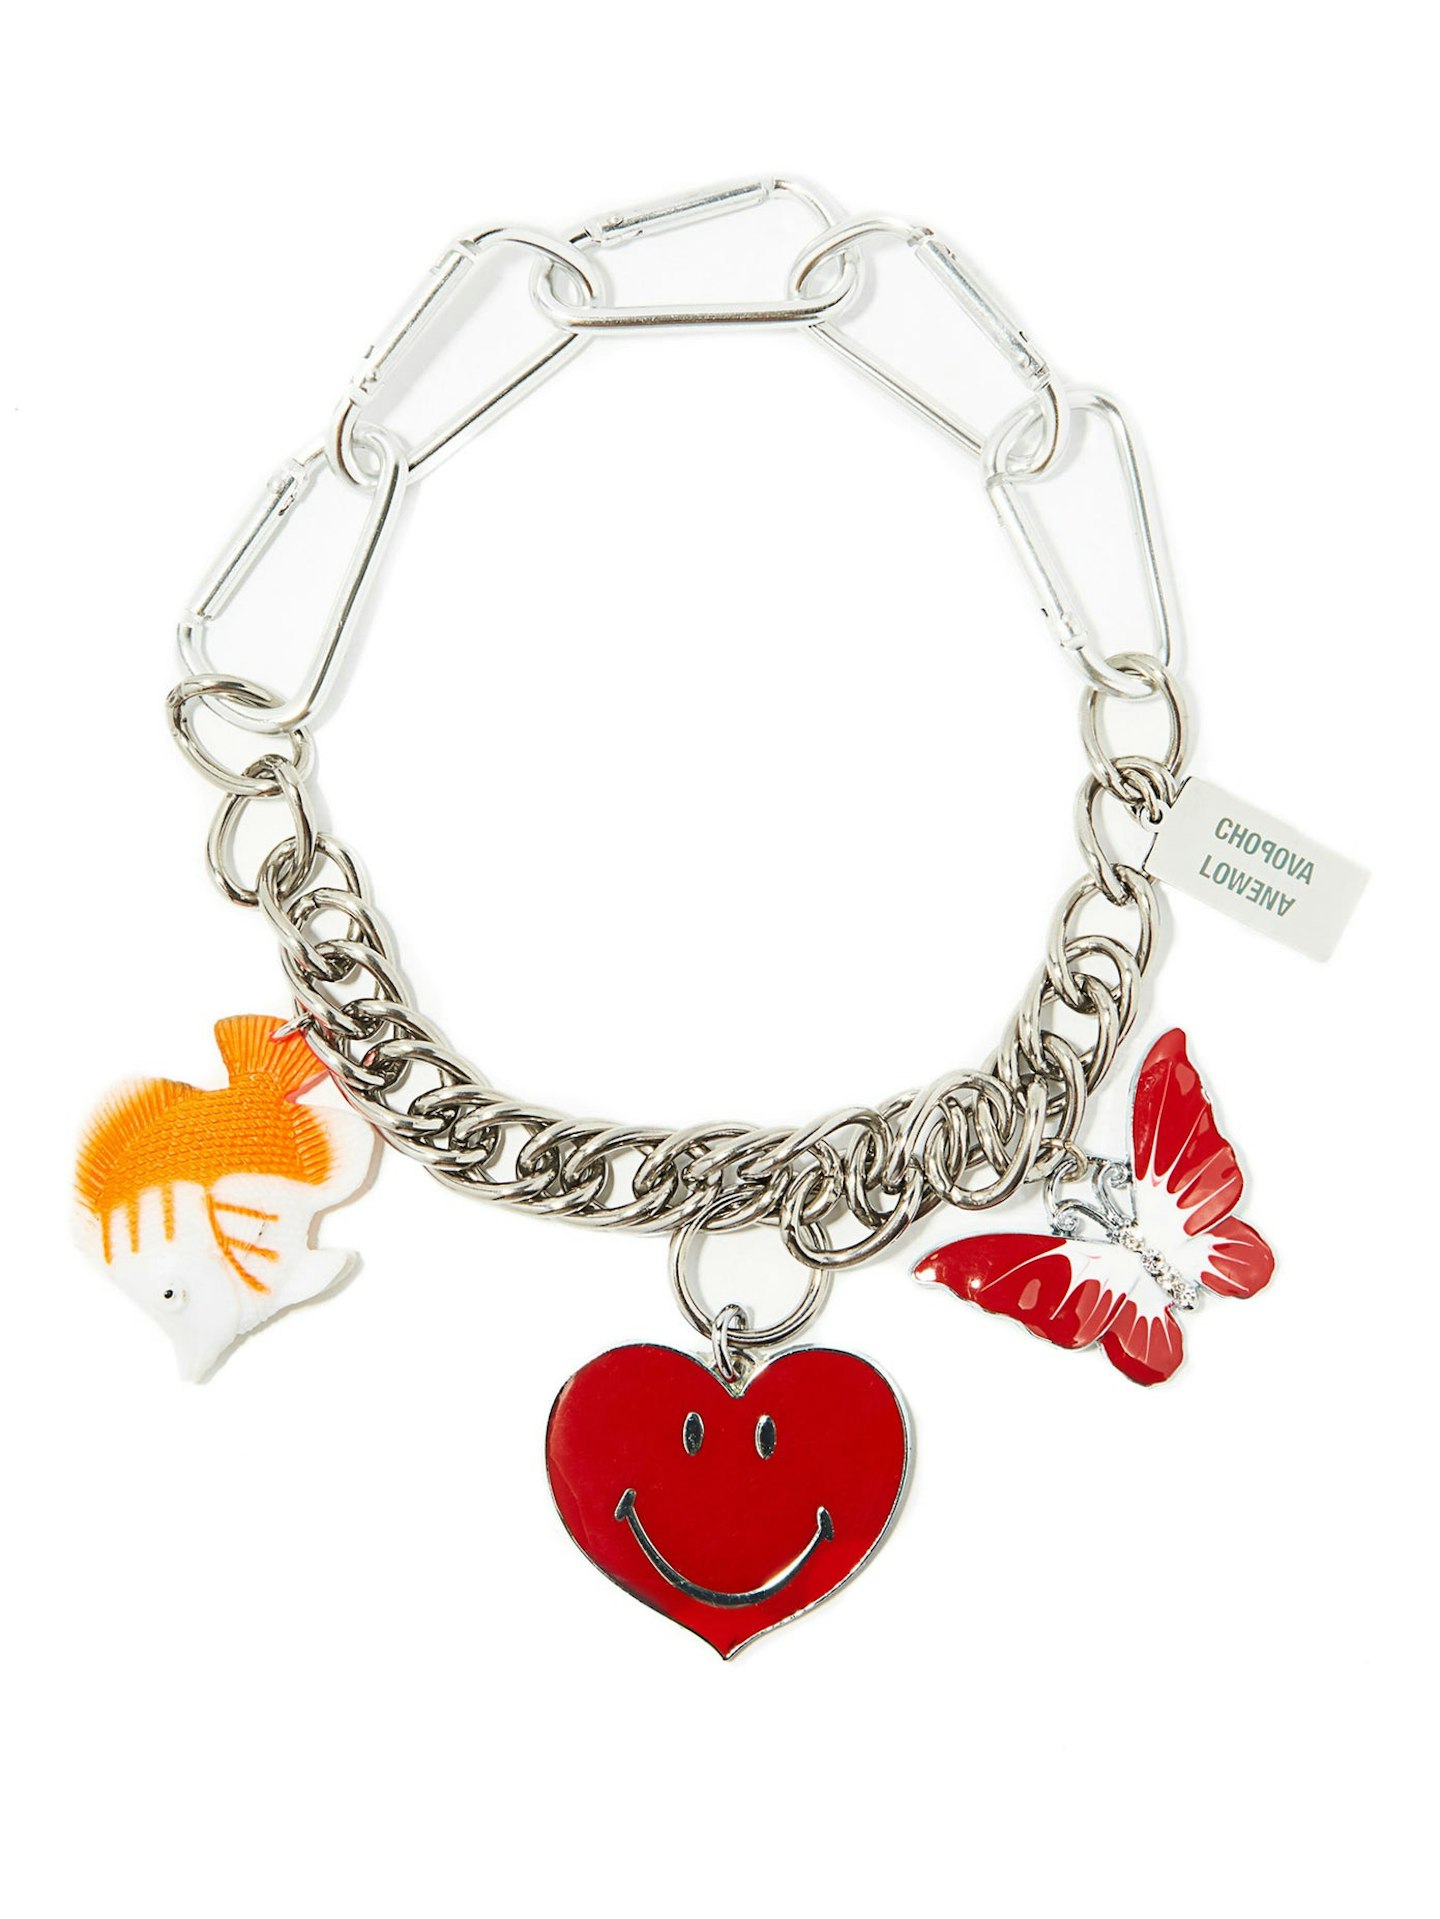 Chopova Lowena, Vintage Heart Chain Necklace, £255